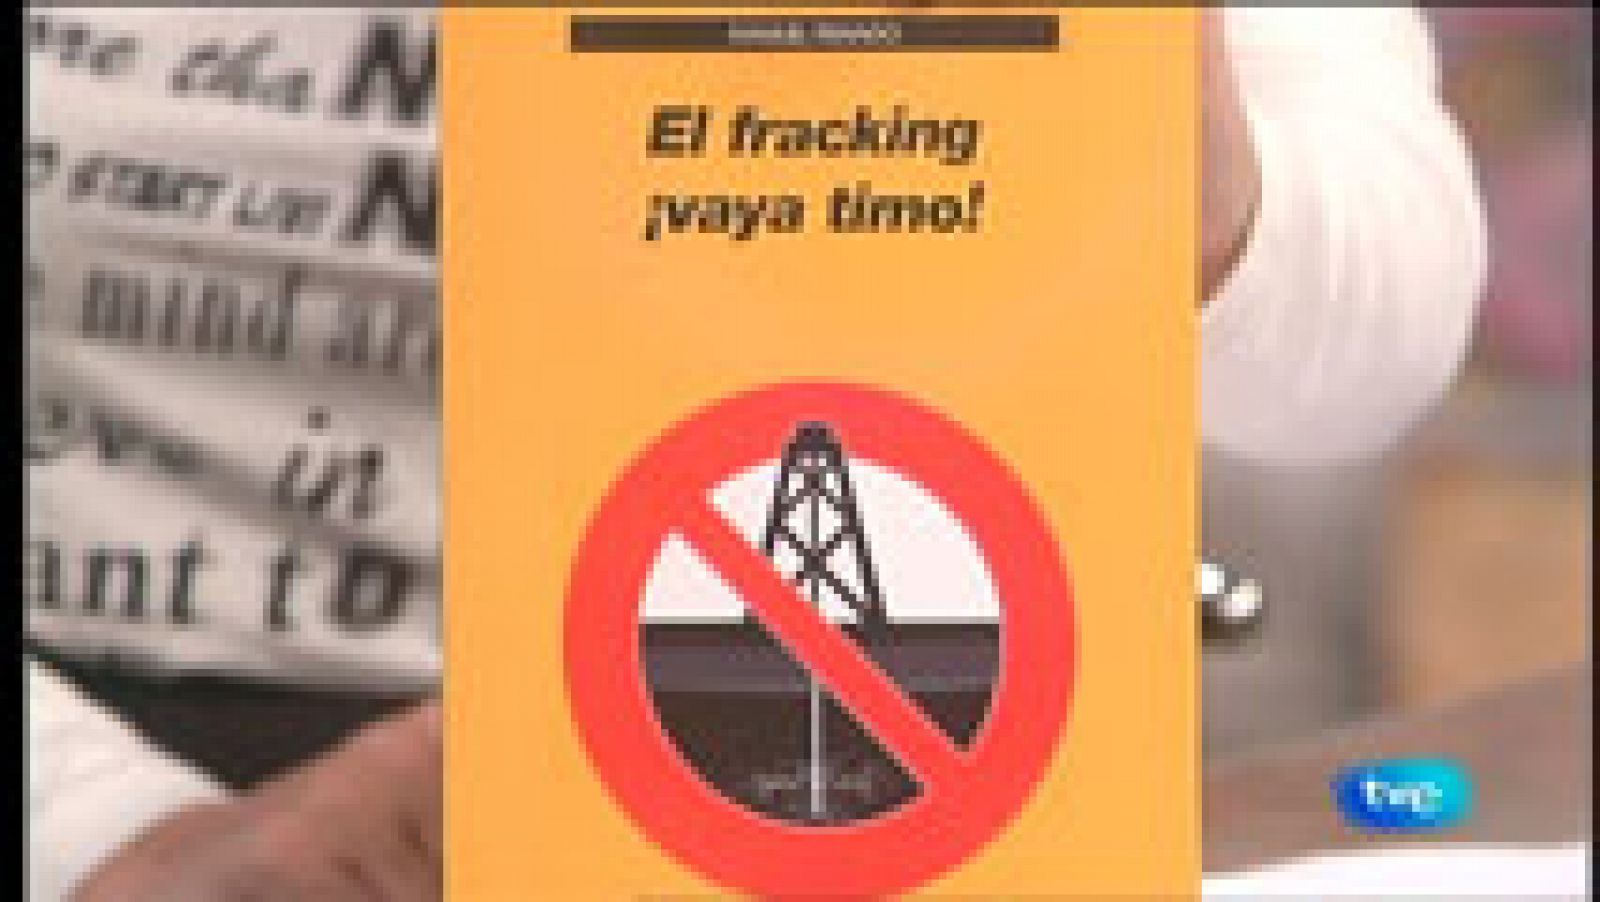 La aventura del Saber: La Aventura del Saber. Manuel Peinado. El fracking, vaya timo | RTVE Play